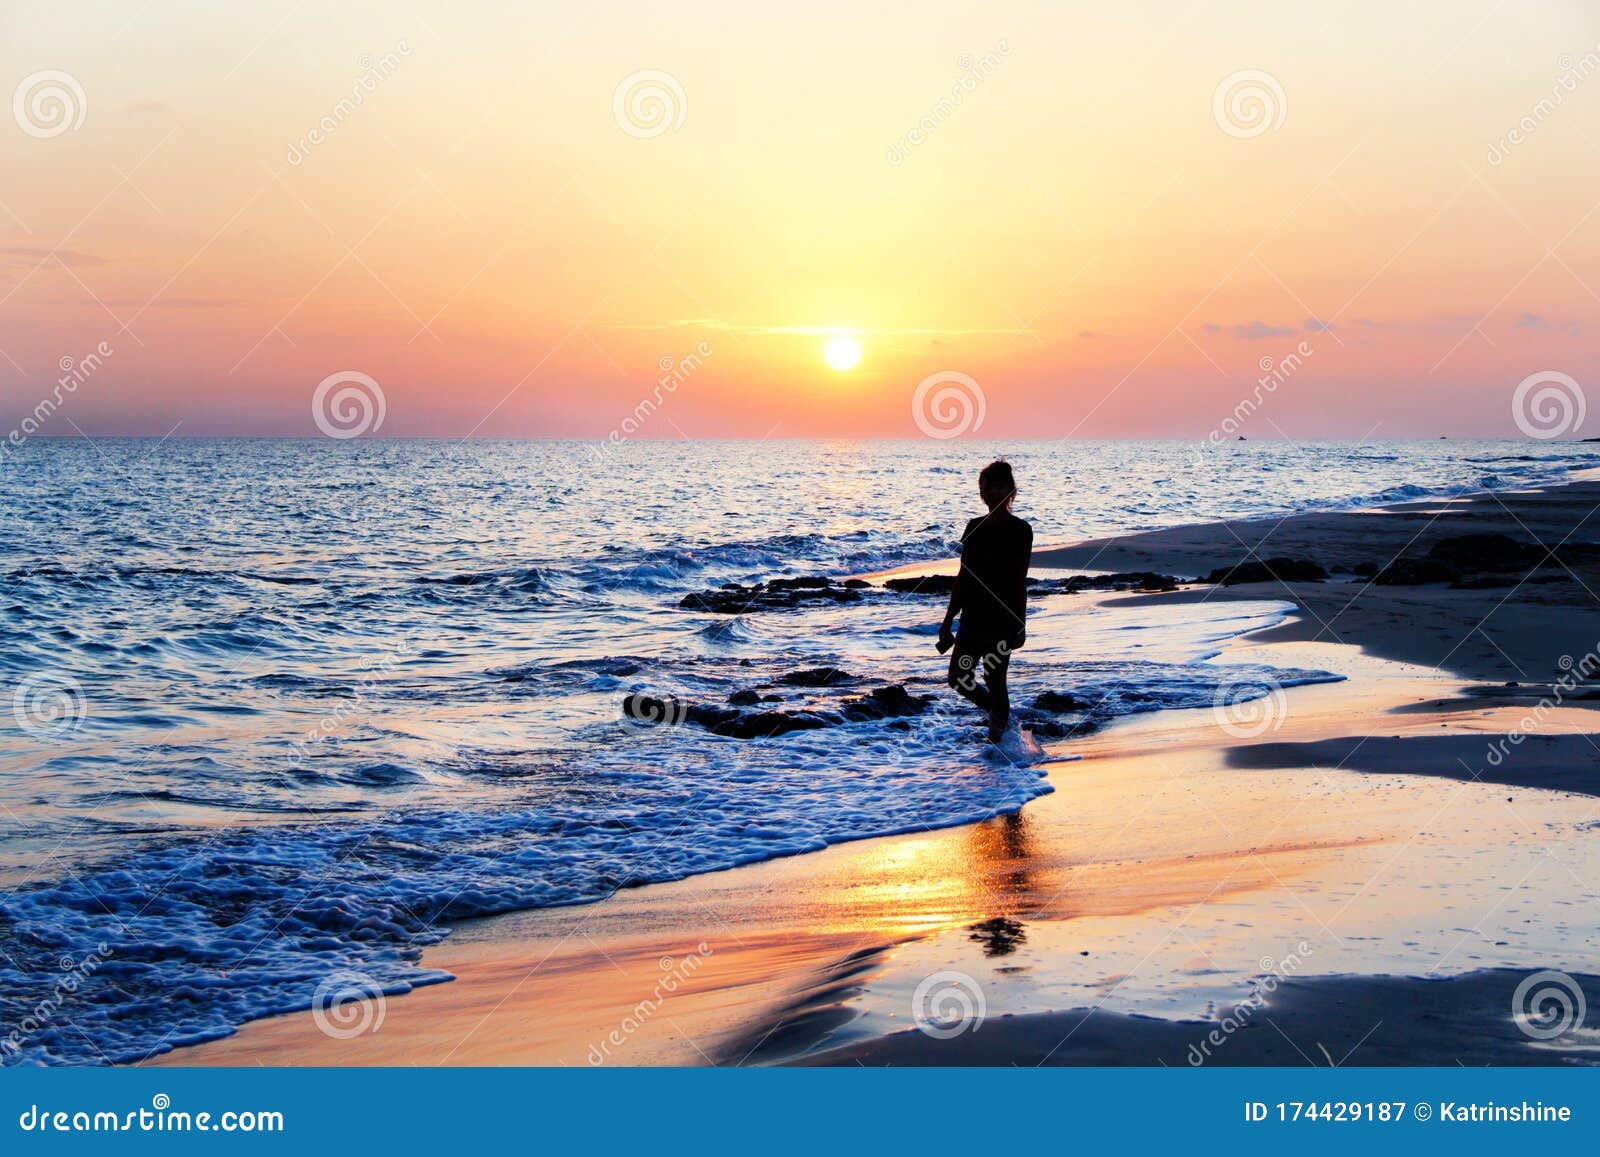 Wallpaper sea, girl, sunset, dog, silhouette images for 